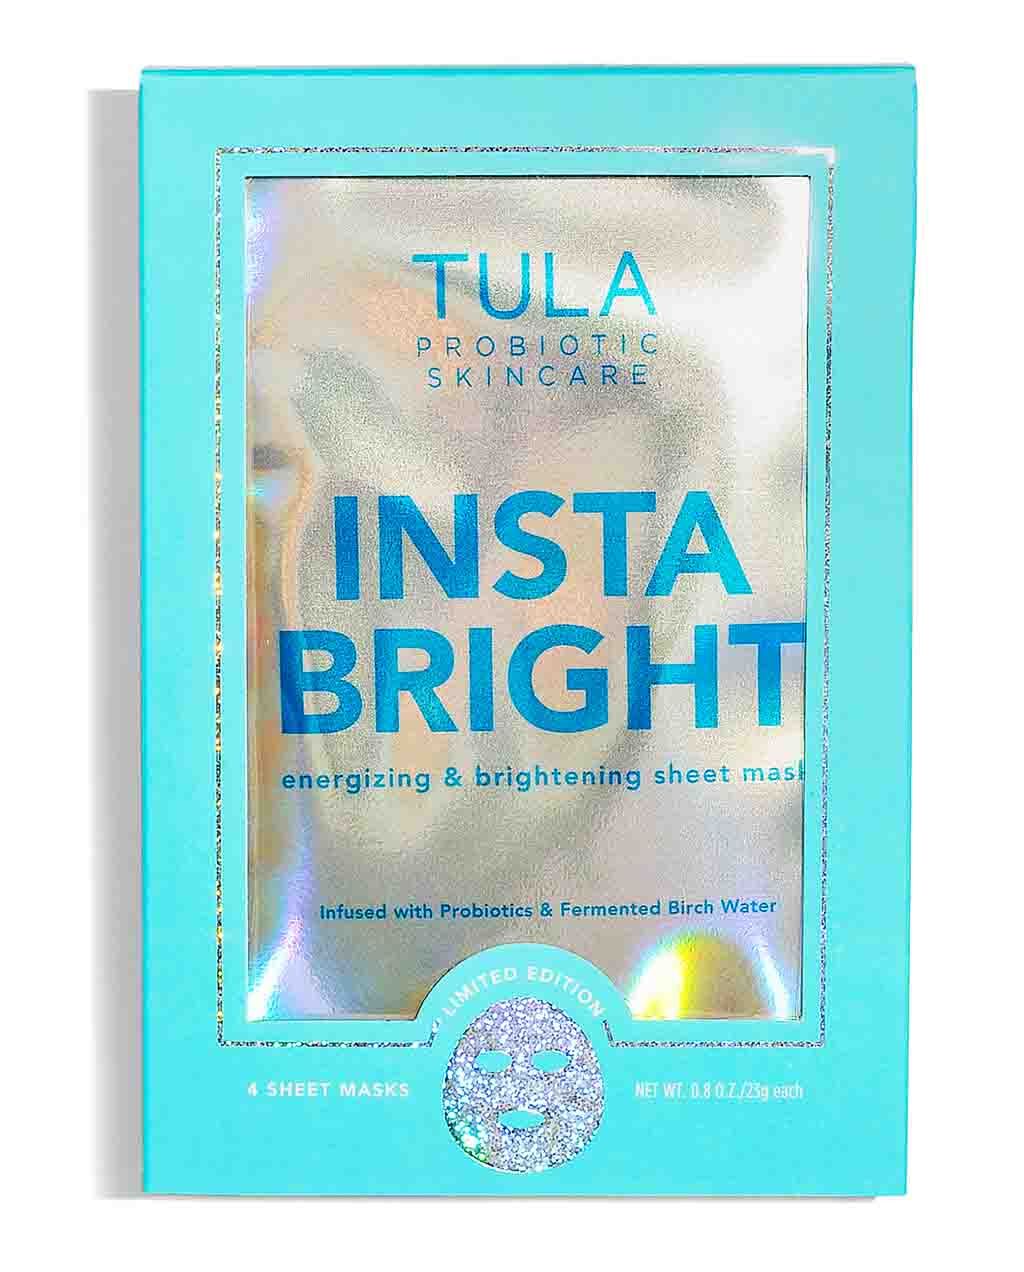 Insta Bright Energizing & Brightening Sheet Mask | TULA Skincare